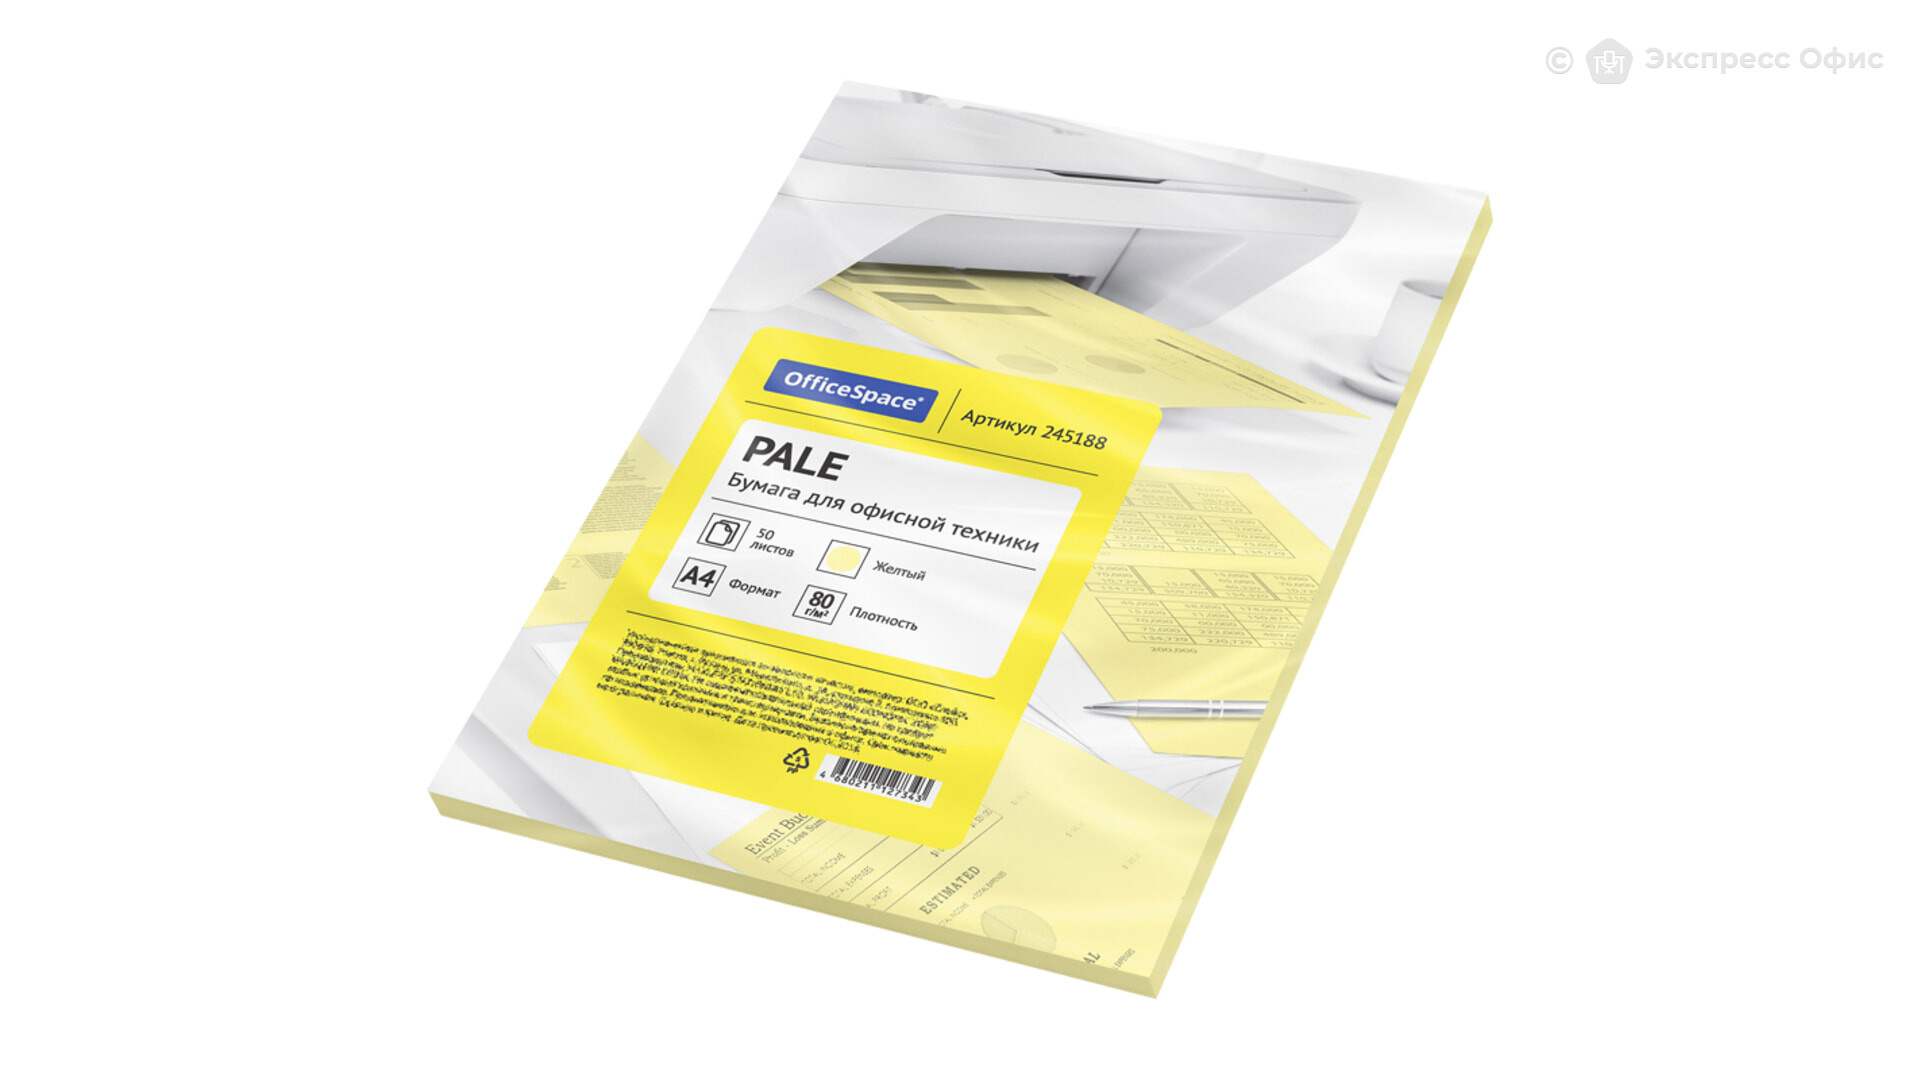 Цветная бумага OfficeSpace pale mix OfficeSpace 245188, 50 листов, желтый